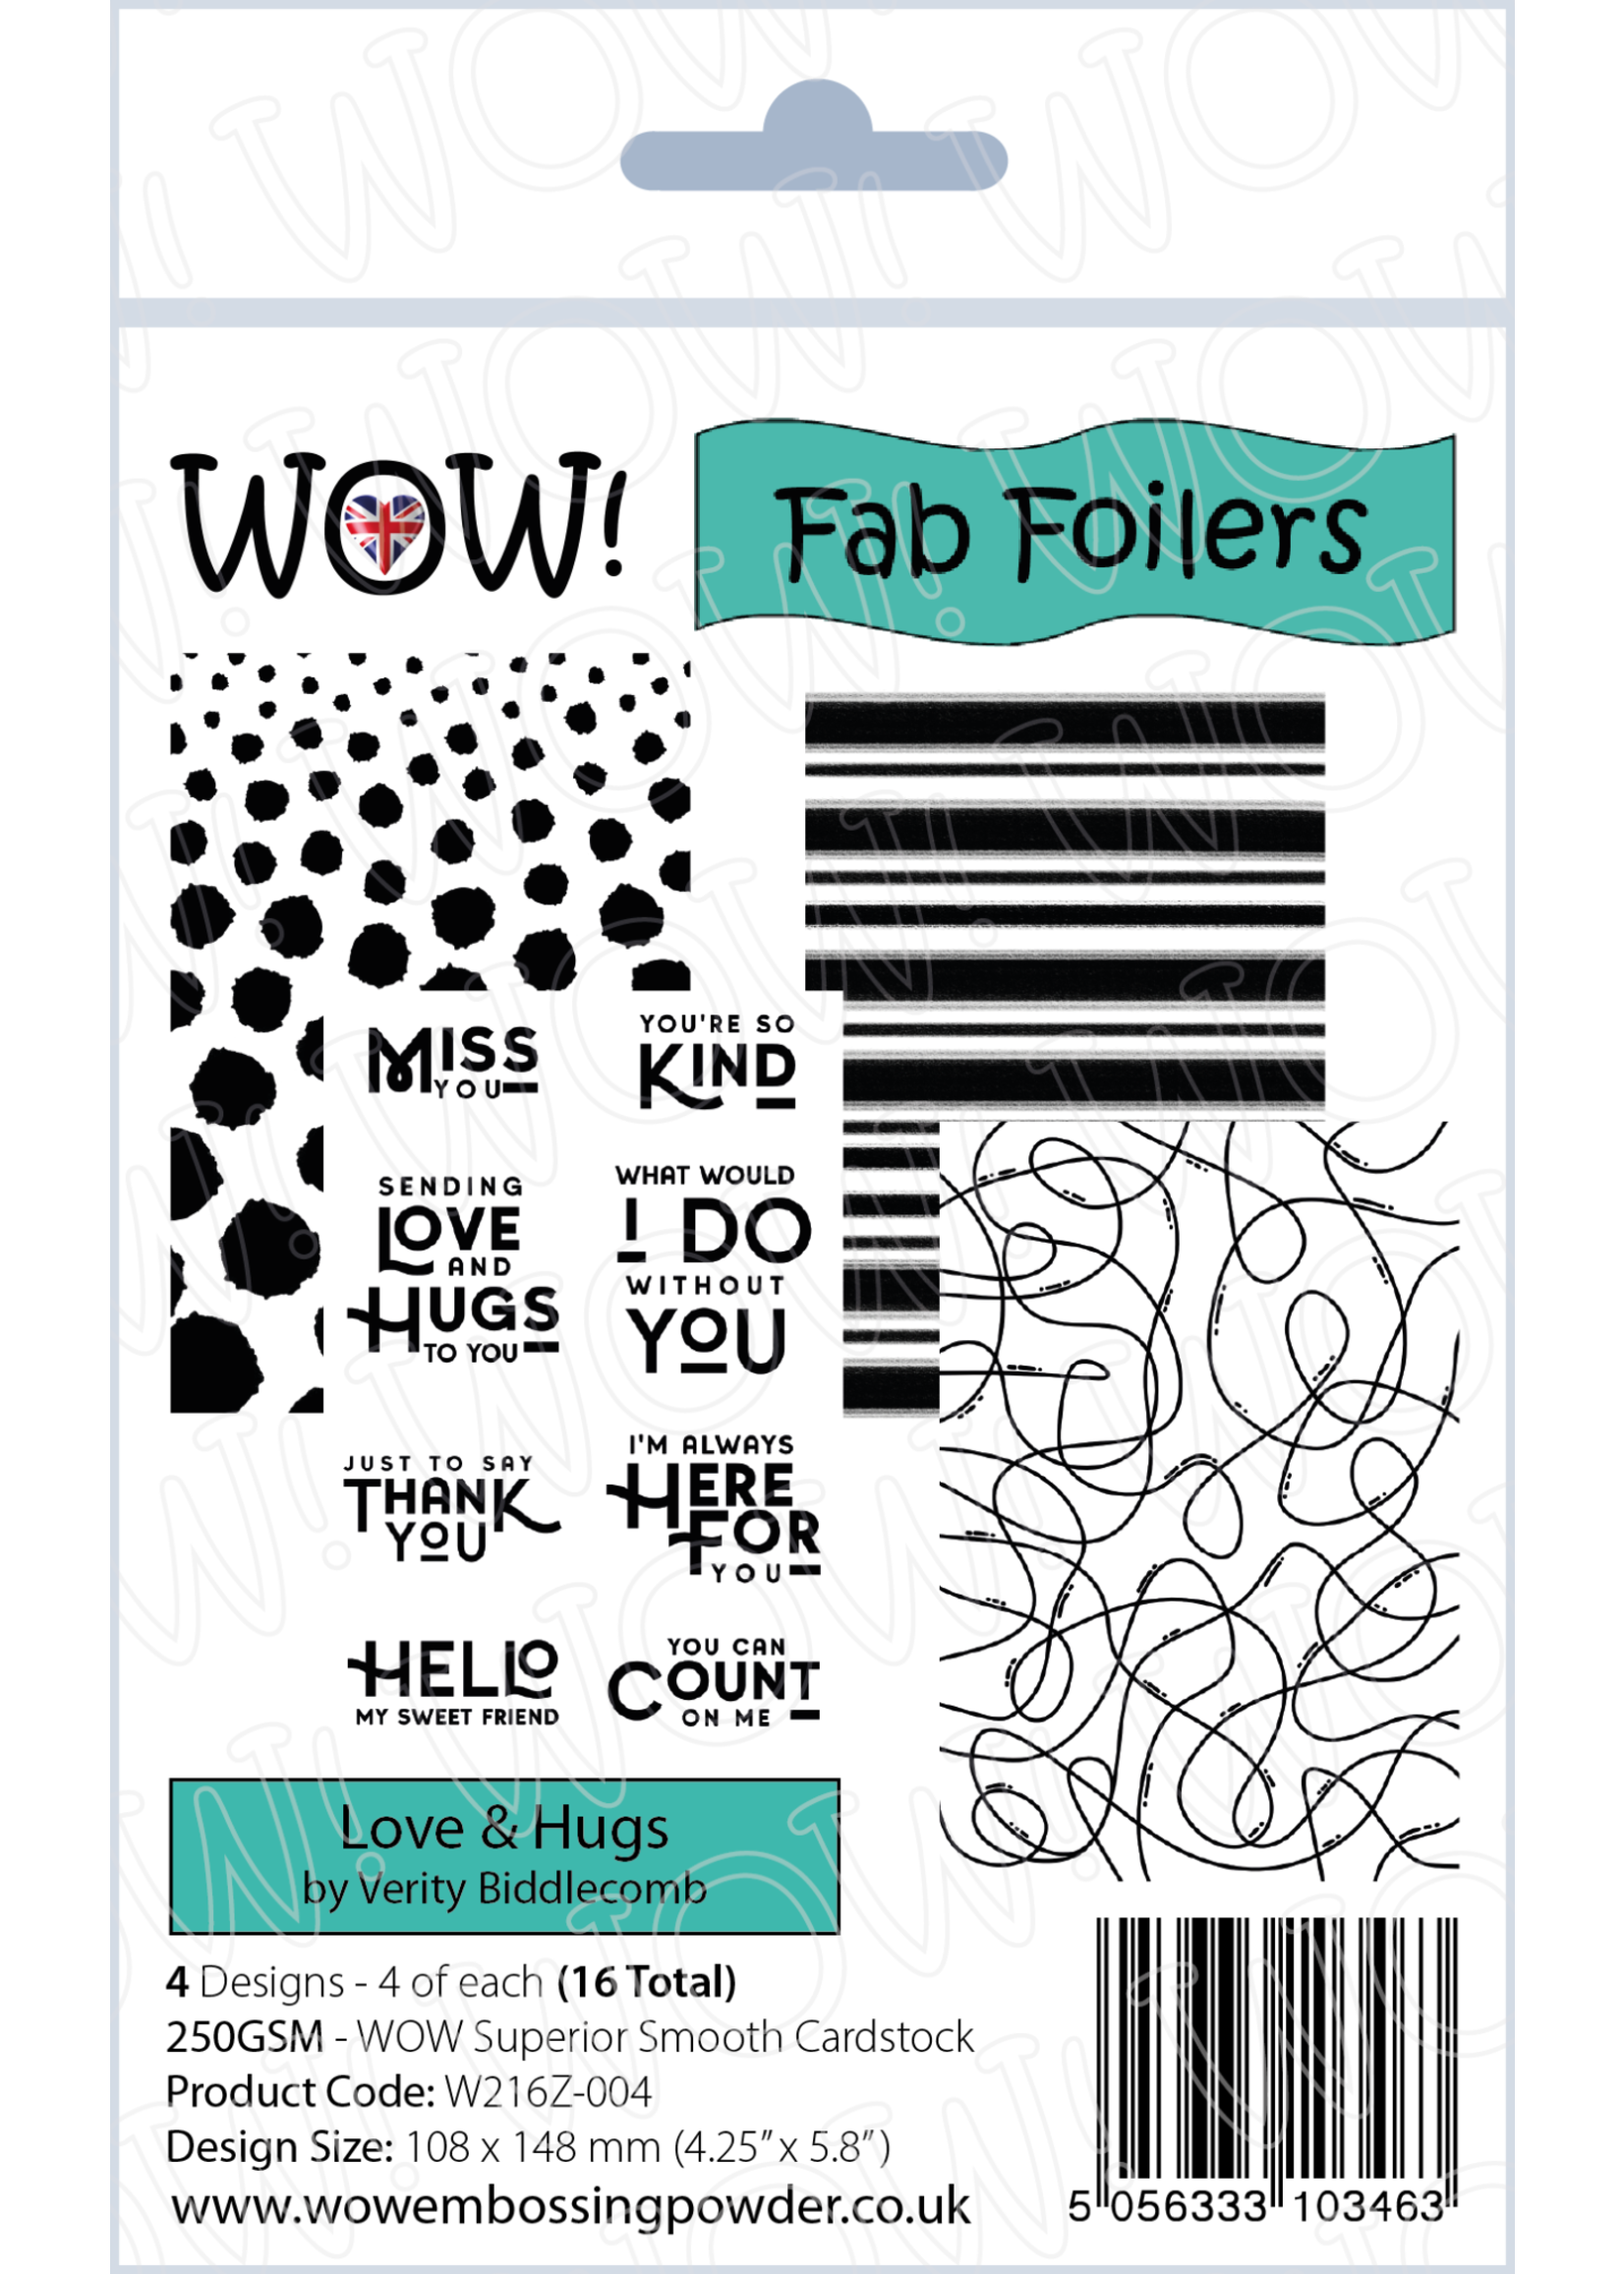 wow! Wow! Fab Foilers: Love & Hugs